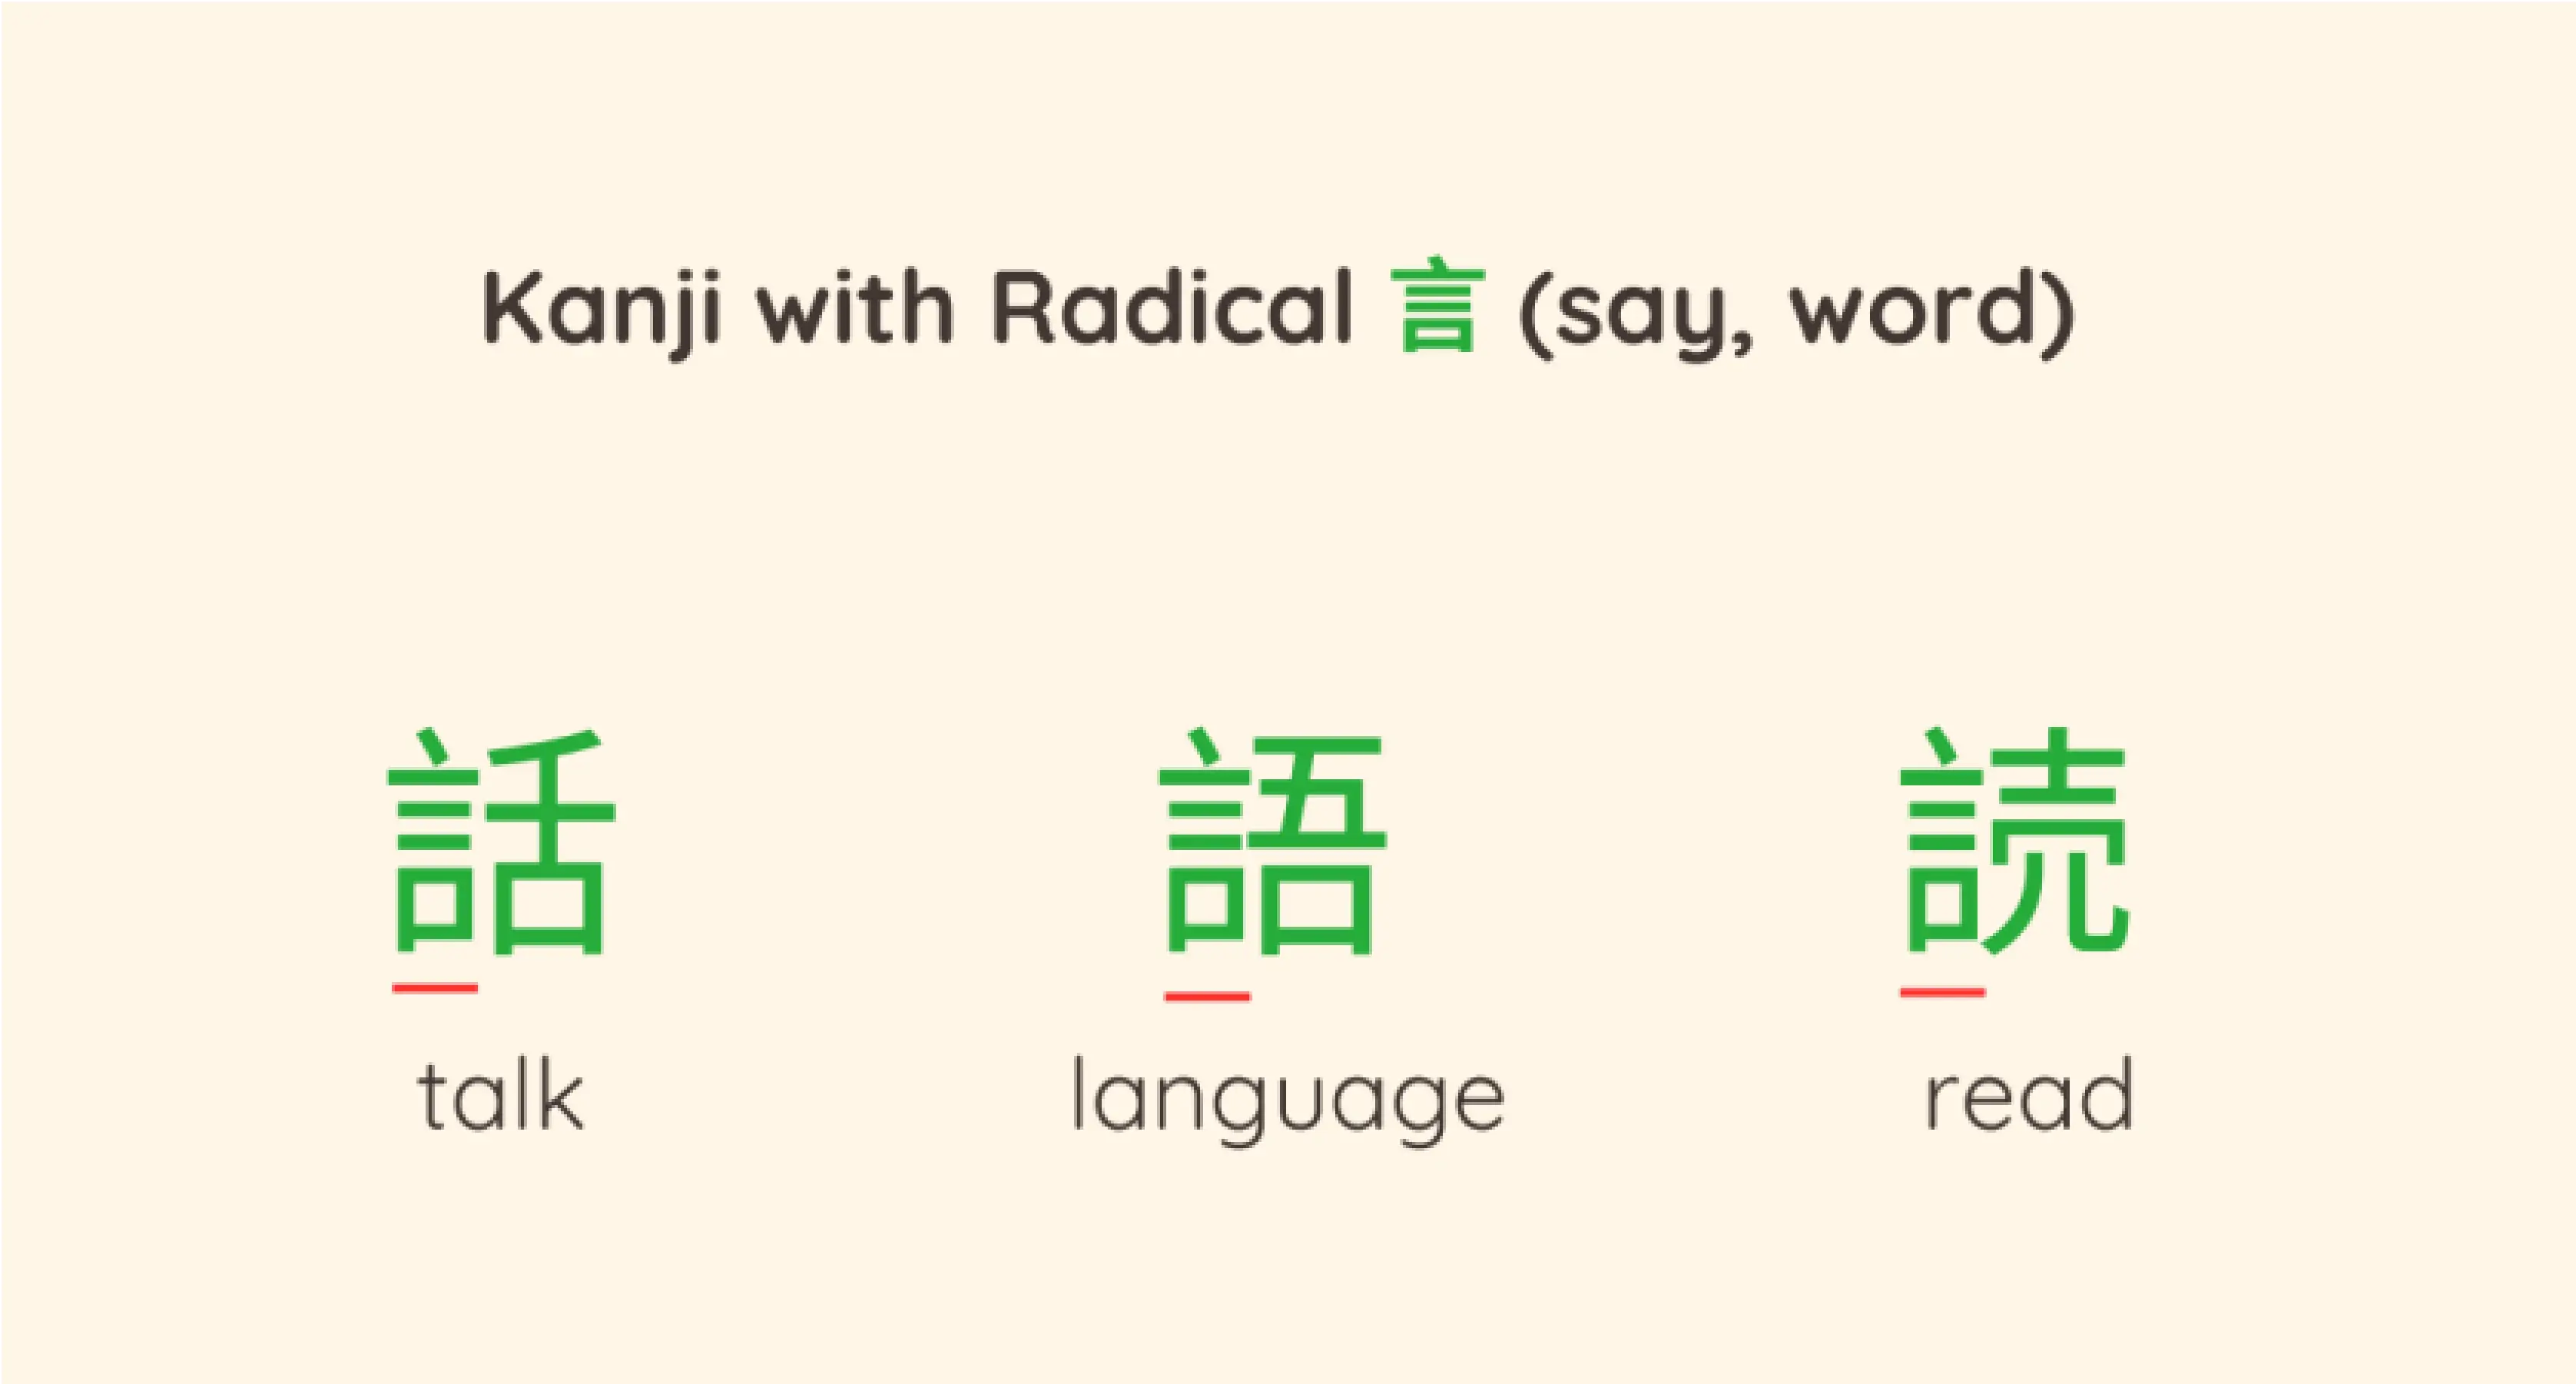 Learn Japanese alphabet katakana